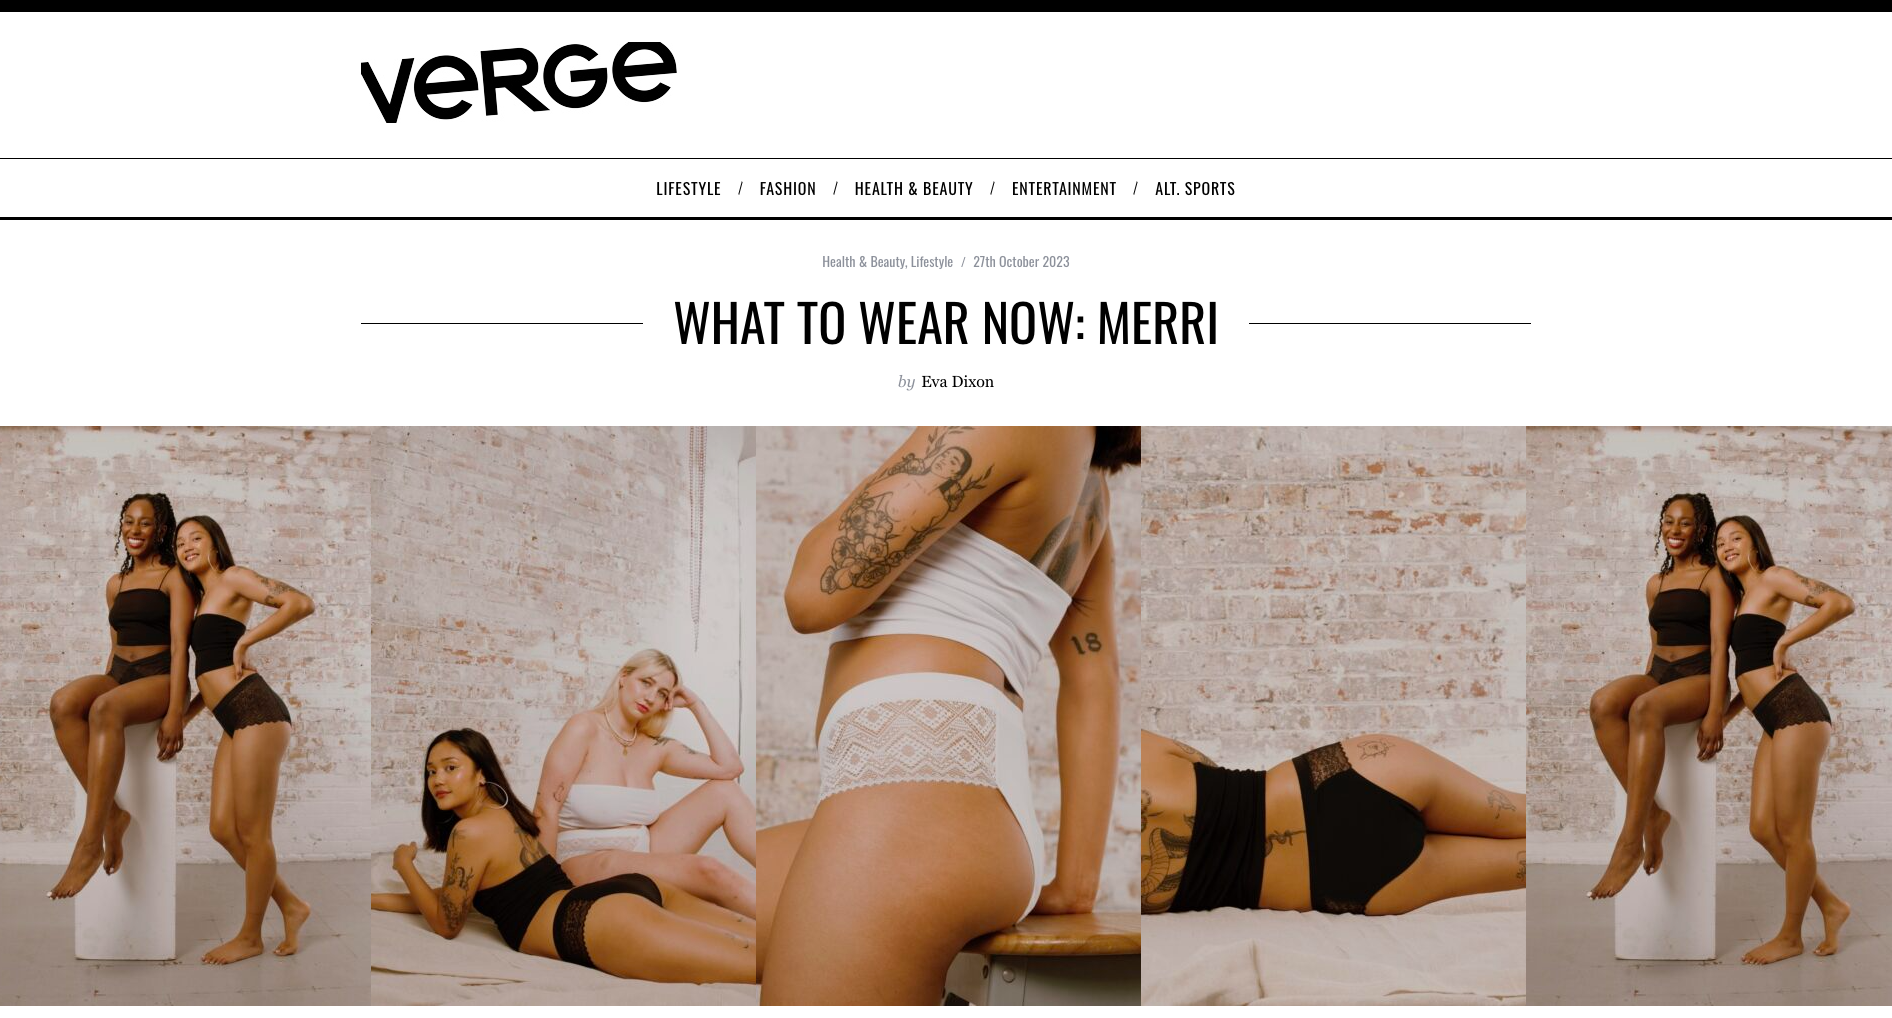 Verge Magazine- WHAT TO WEAR NOW: MERRI